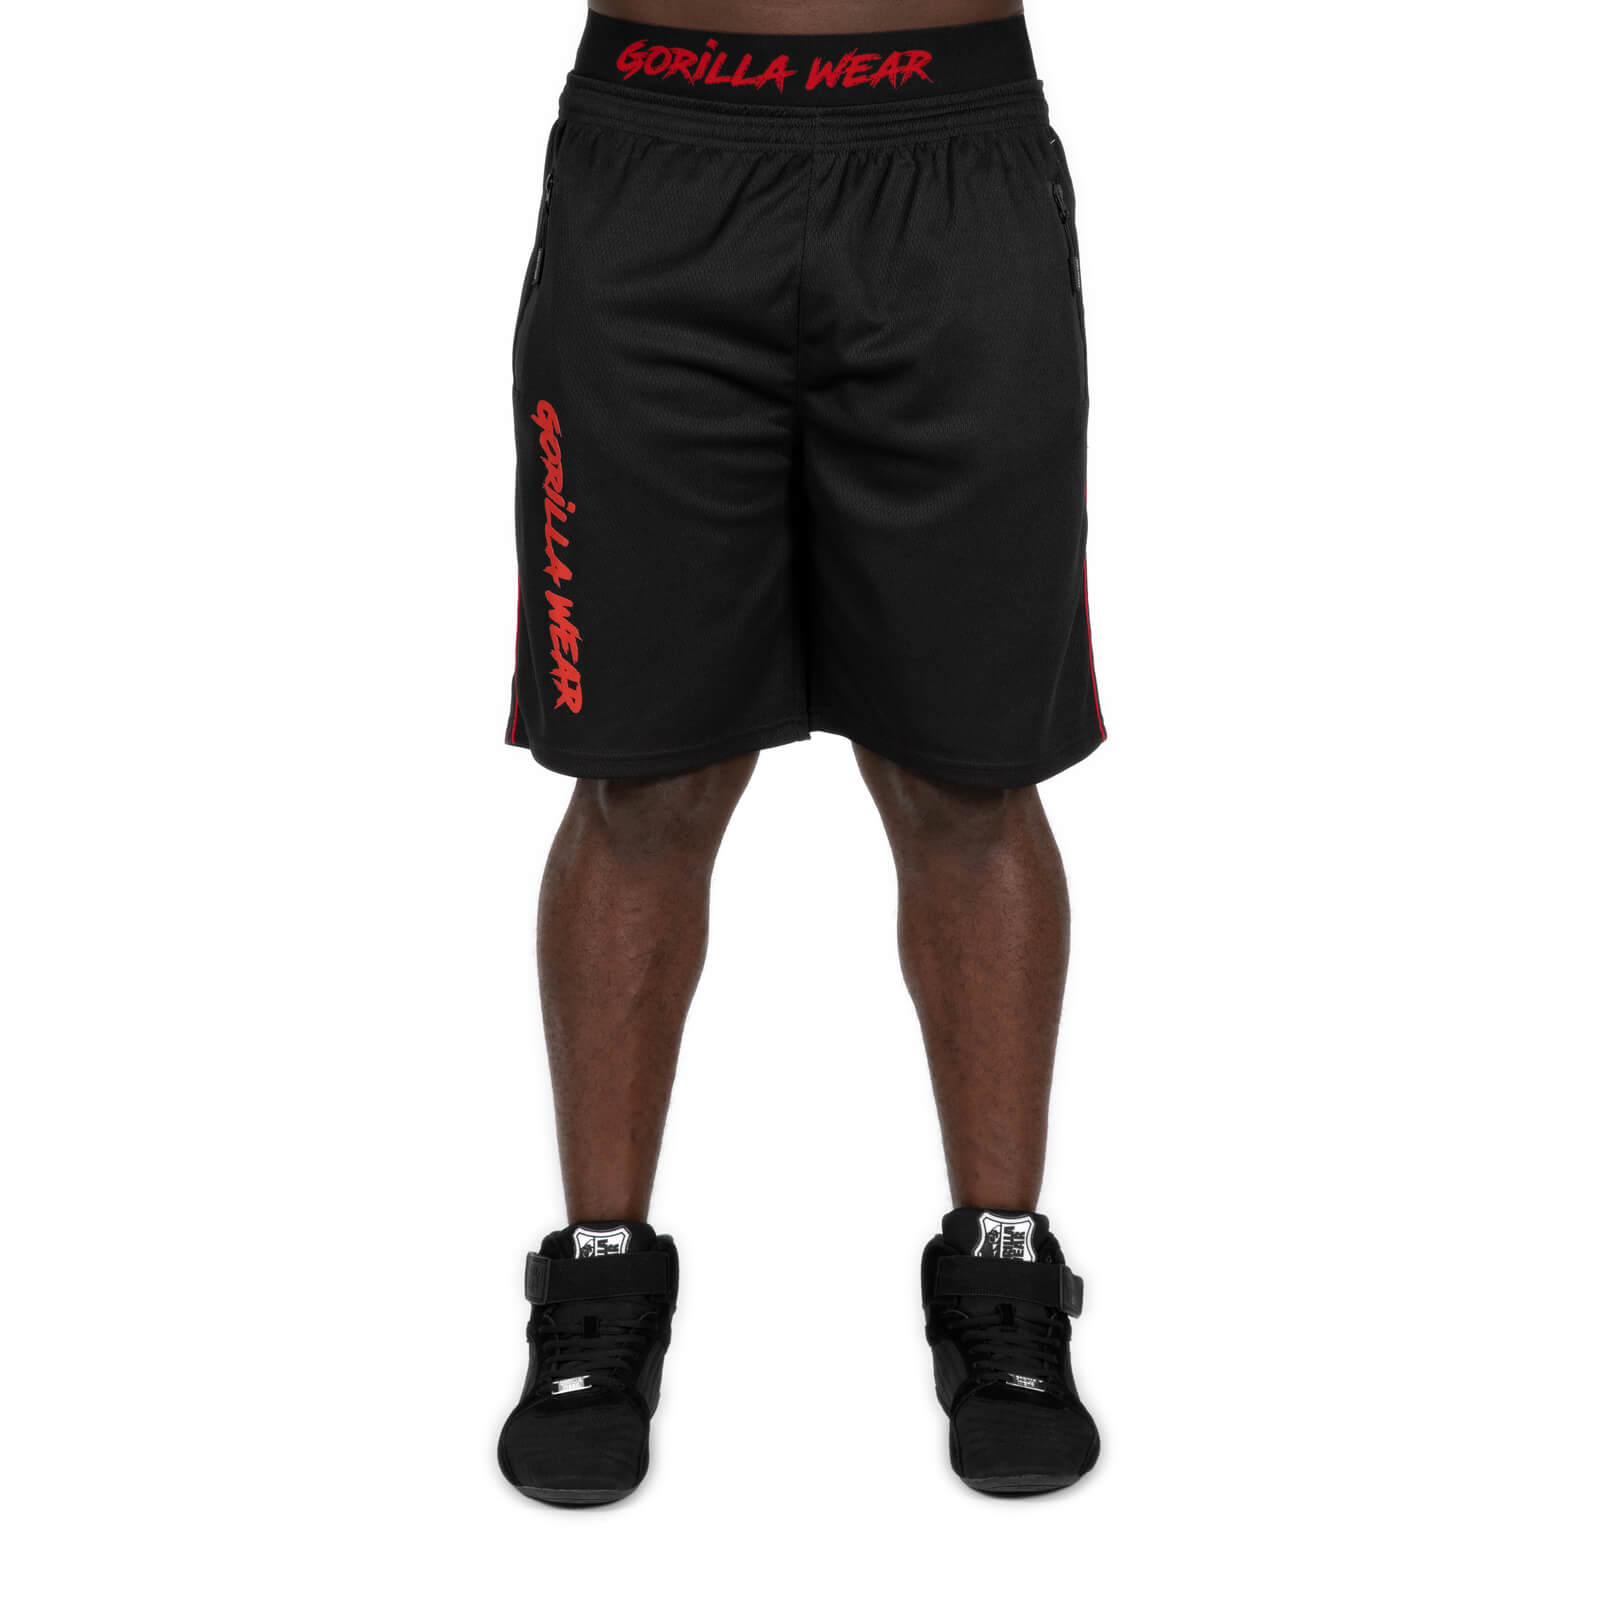 Kolla in Mercury Mesh Shorts, black/red, Gorilla Wear hos SportGymButiken.se